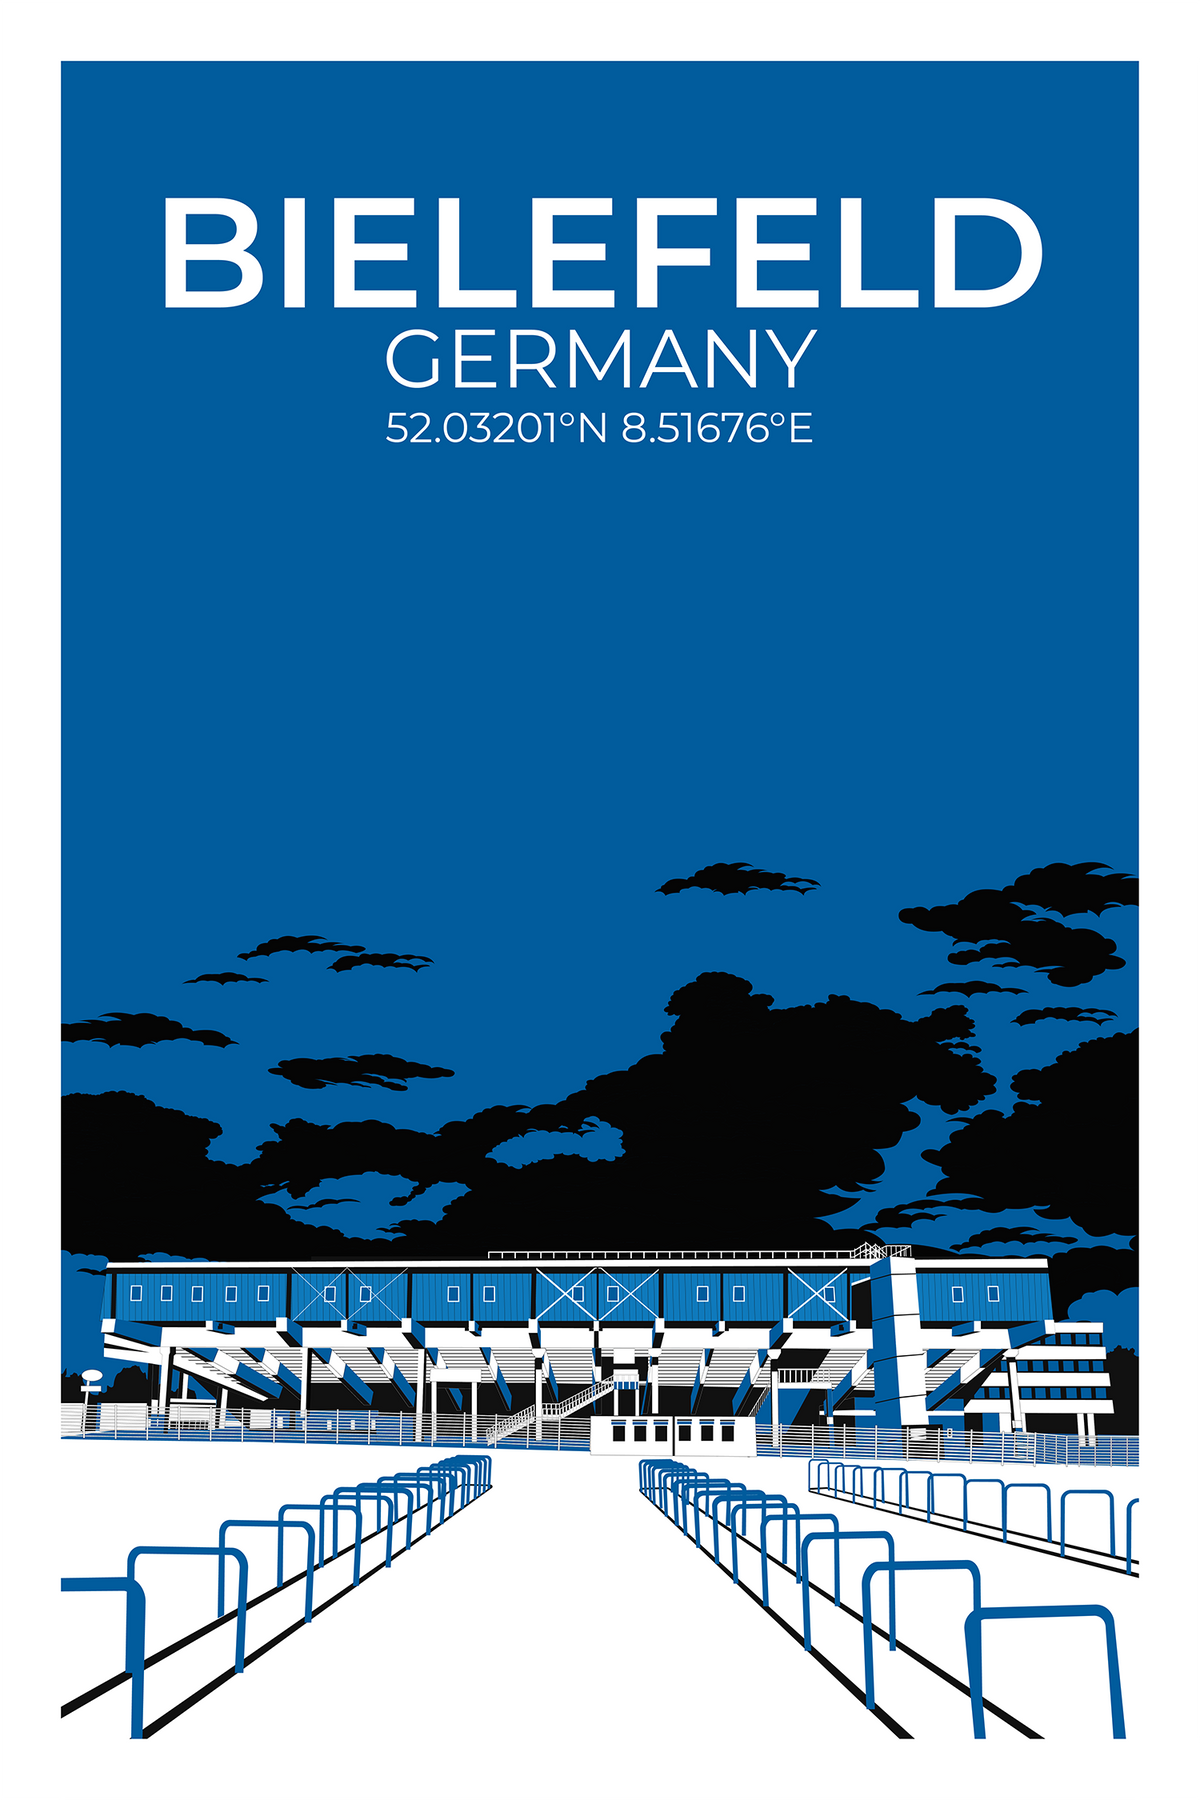 Stadion Illustration Poster Bielefeld